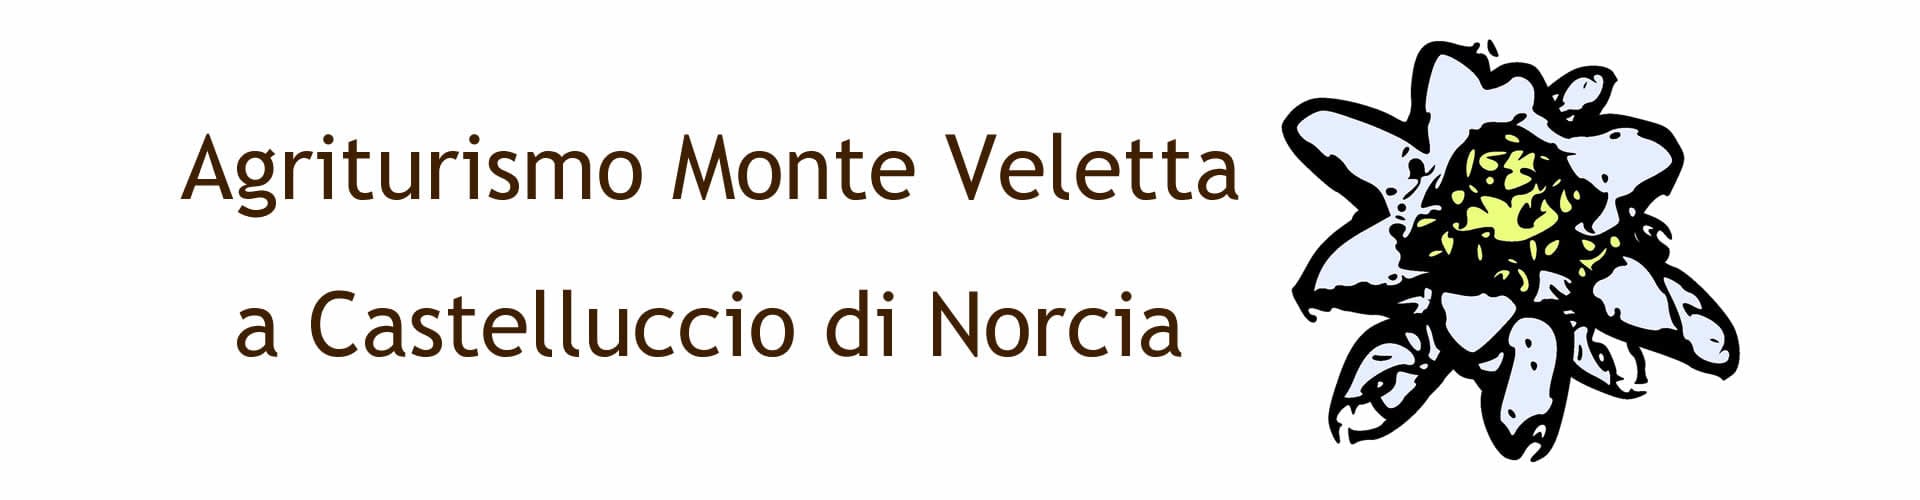 Agriturismo Monte Veletta - Castelluccio di Norcia